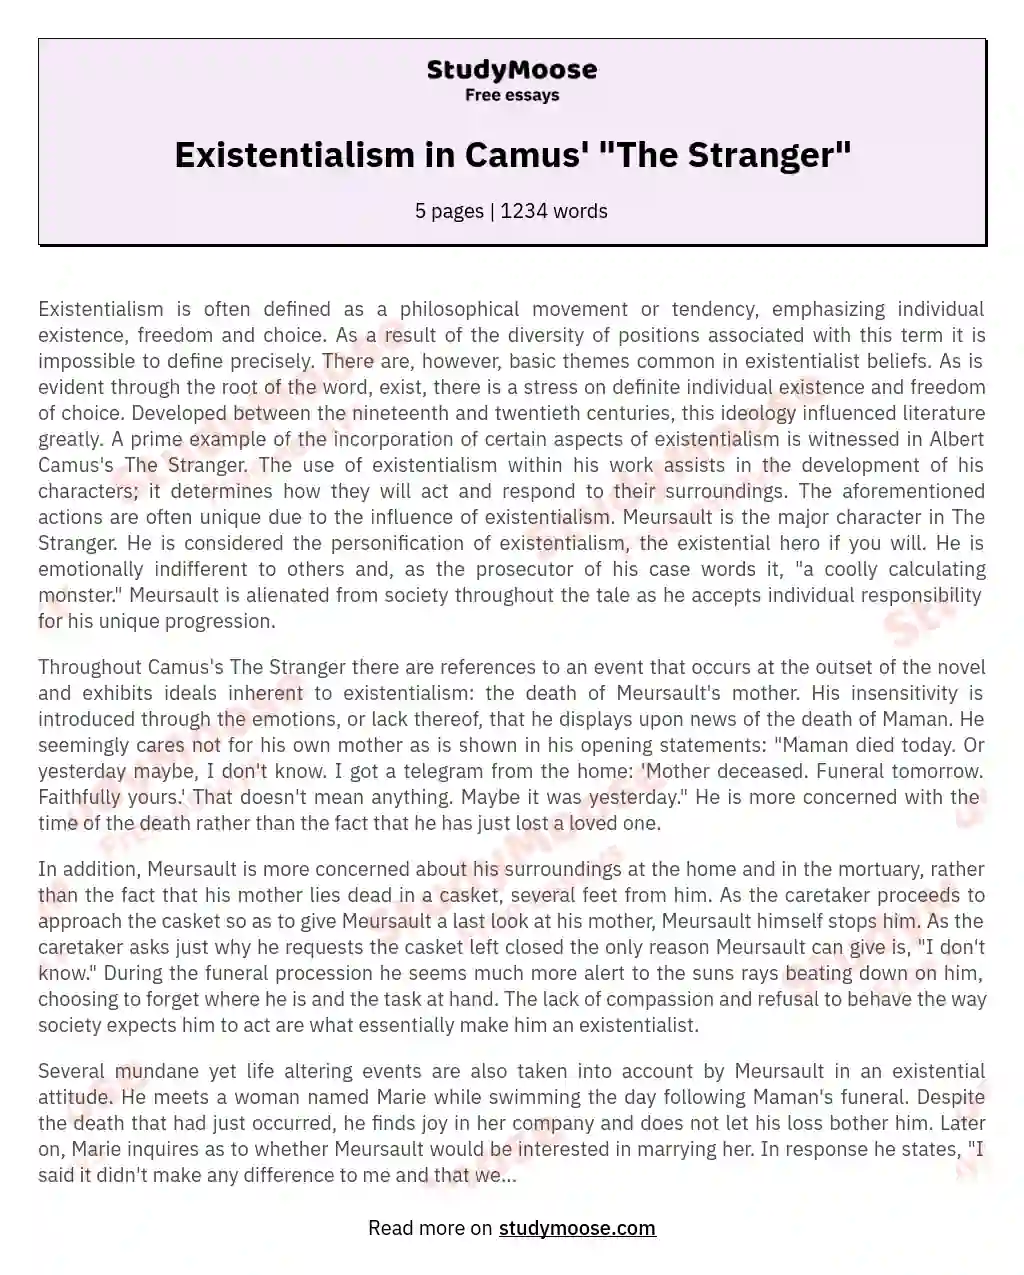 Existentialism in Camus' "The Stranger" essay